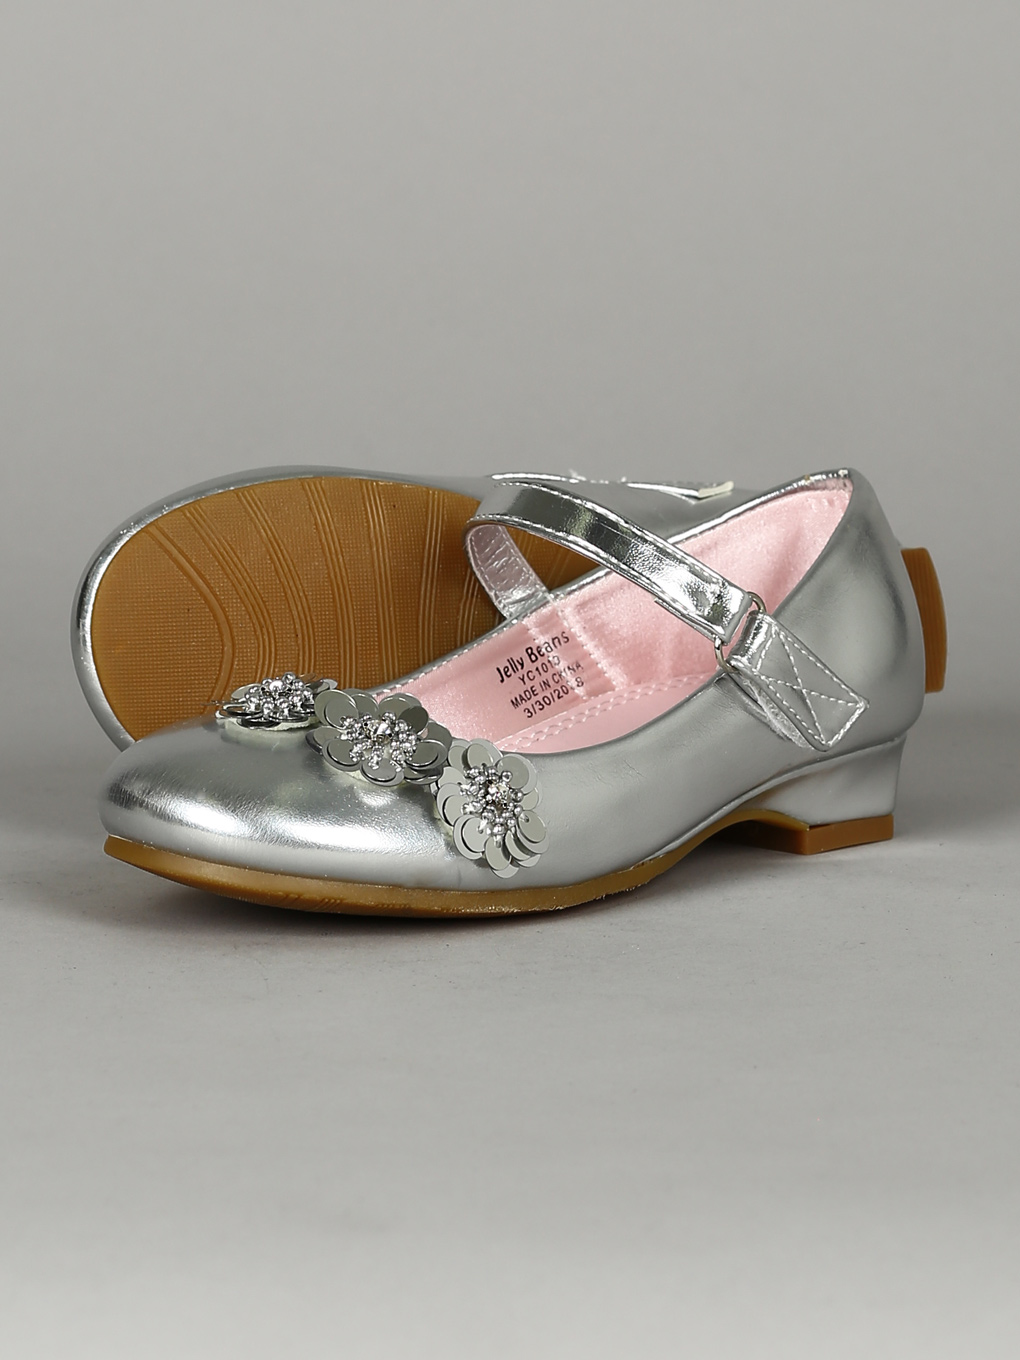 Girls Patent / Metallic Flower Decor Mary Jane Kitten Heel Pump 18328 - image 4 of 5